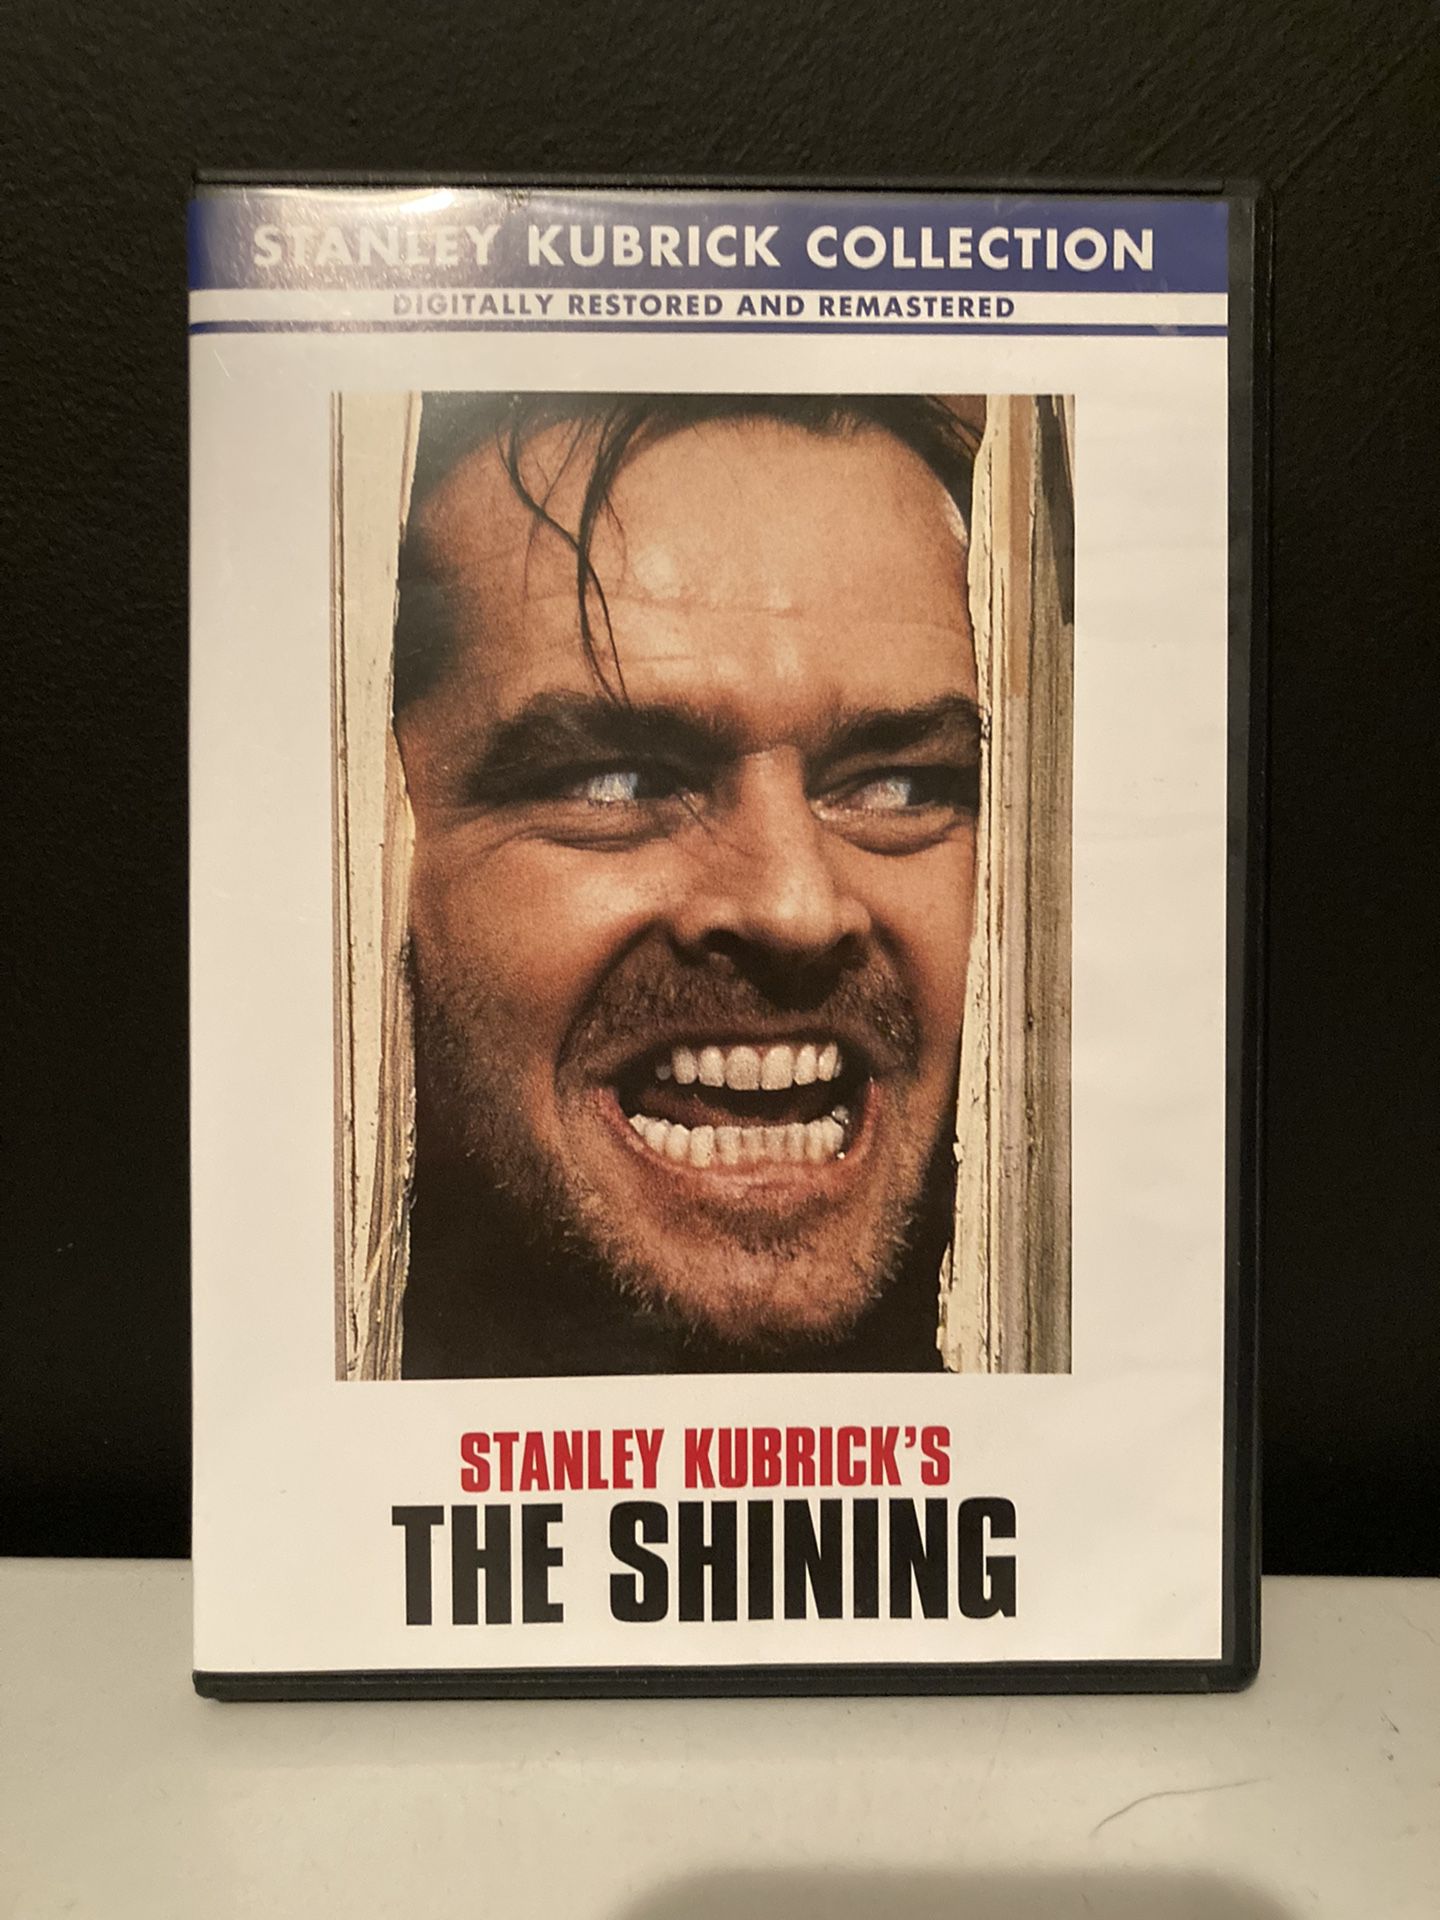 The Shining (Stanley Kubrick DVD, 1980)